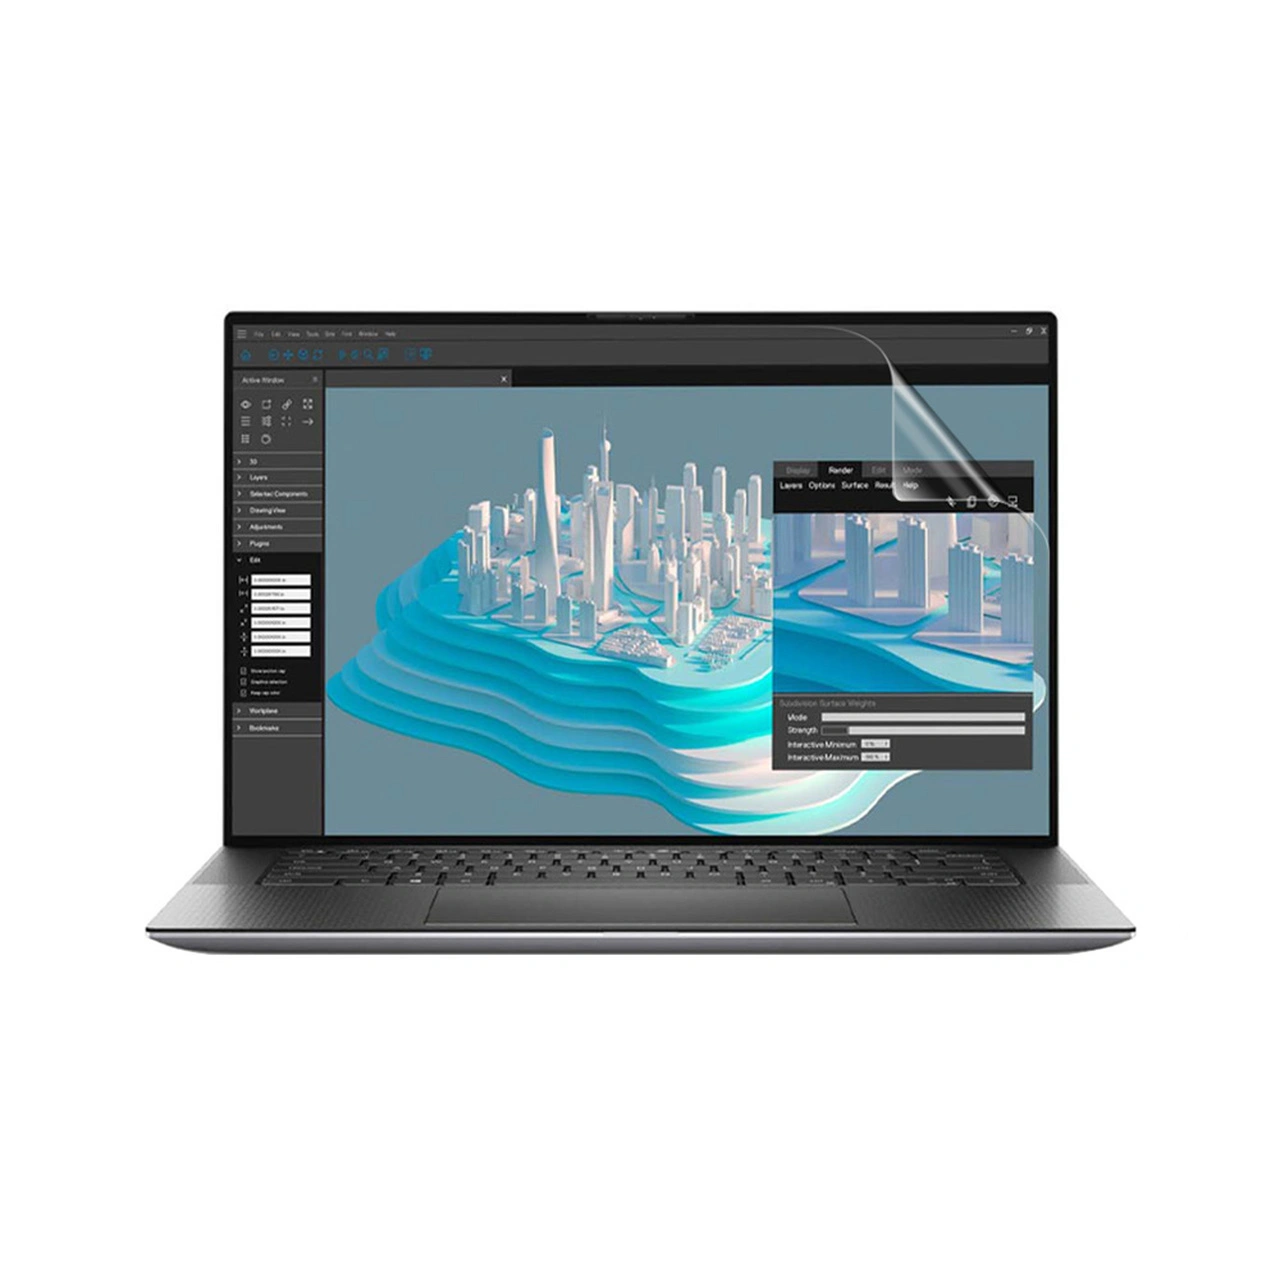 Laptop Cũ Dell Precision 5560 - Intel Core i9-11950H | RTX A2000 | 15.6 Inch Full HD+